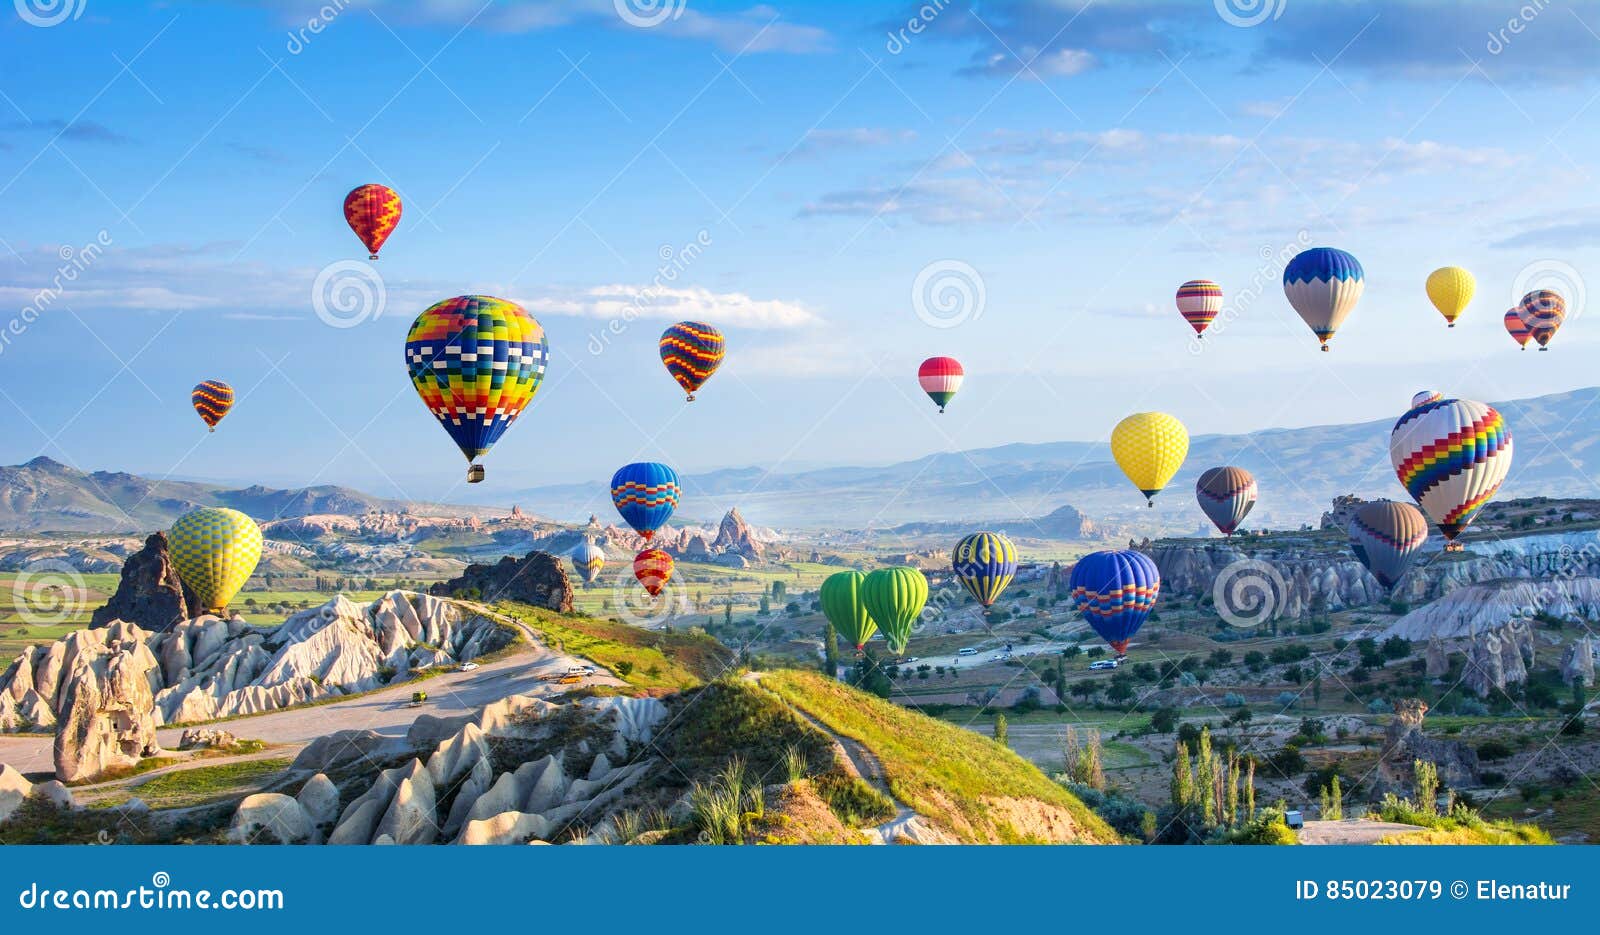 the great tourist attraction of cappadocia - balloon flight. cap